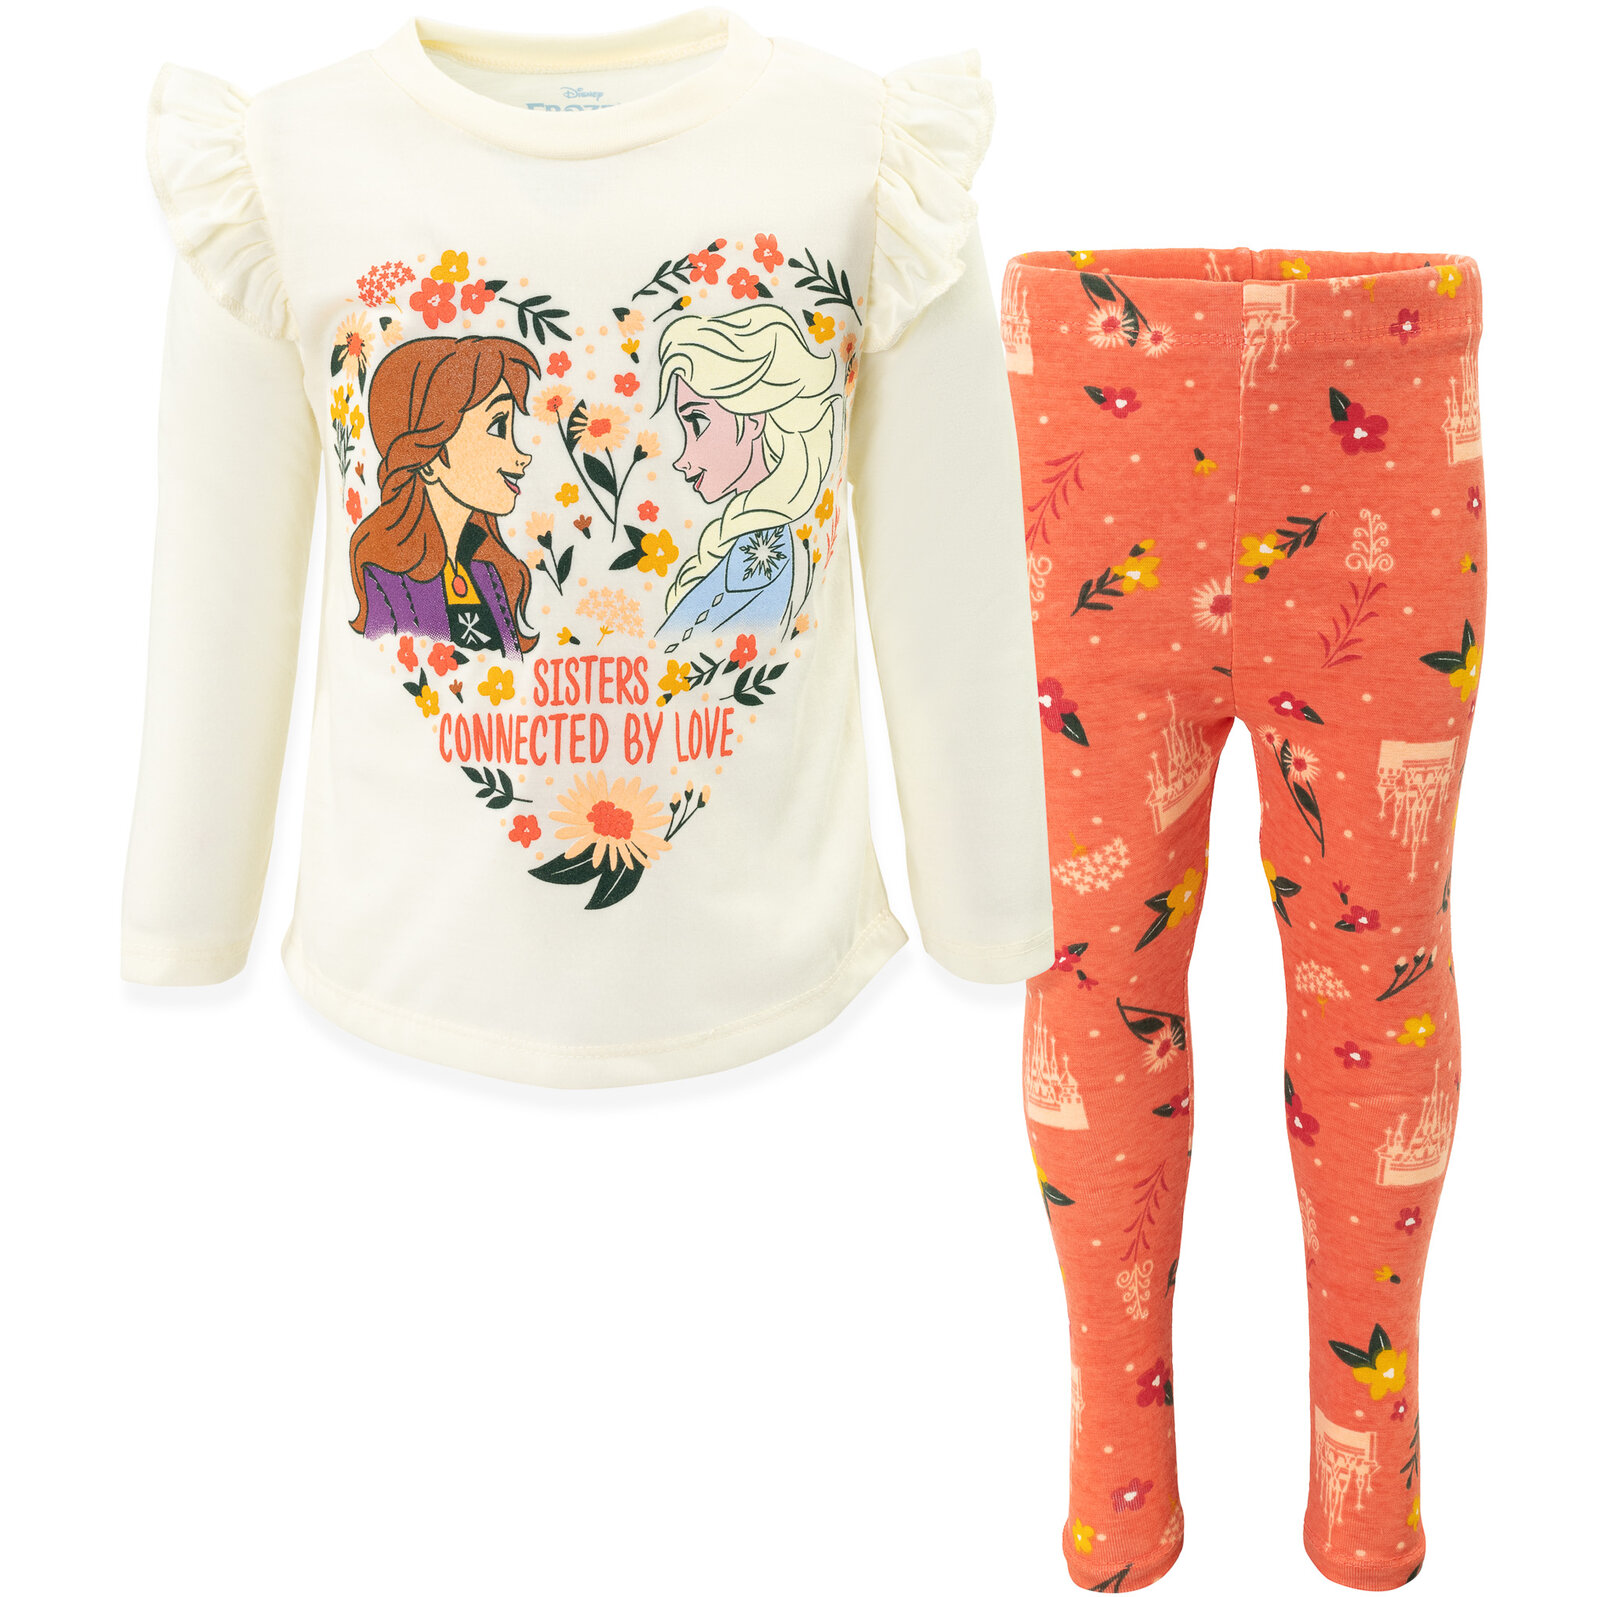 Disney Frozen Elsa Princess Anna Toddler Girls T-Shirt and Leggings Outfit Set Toddler to Little Kid - image 1 of 5